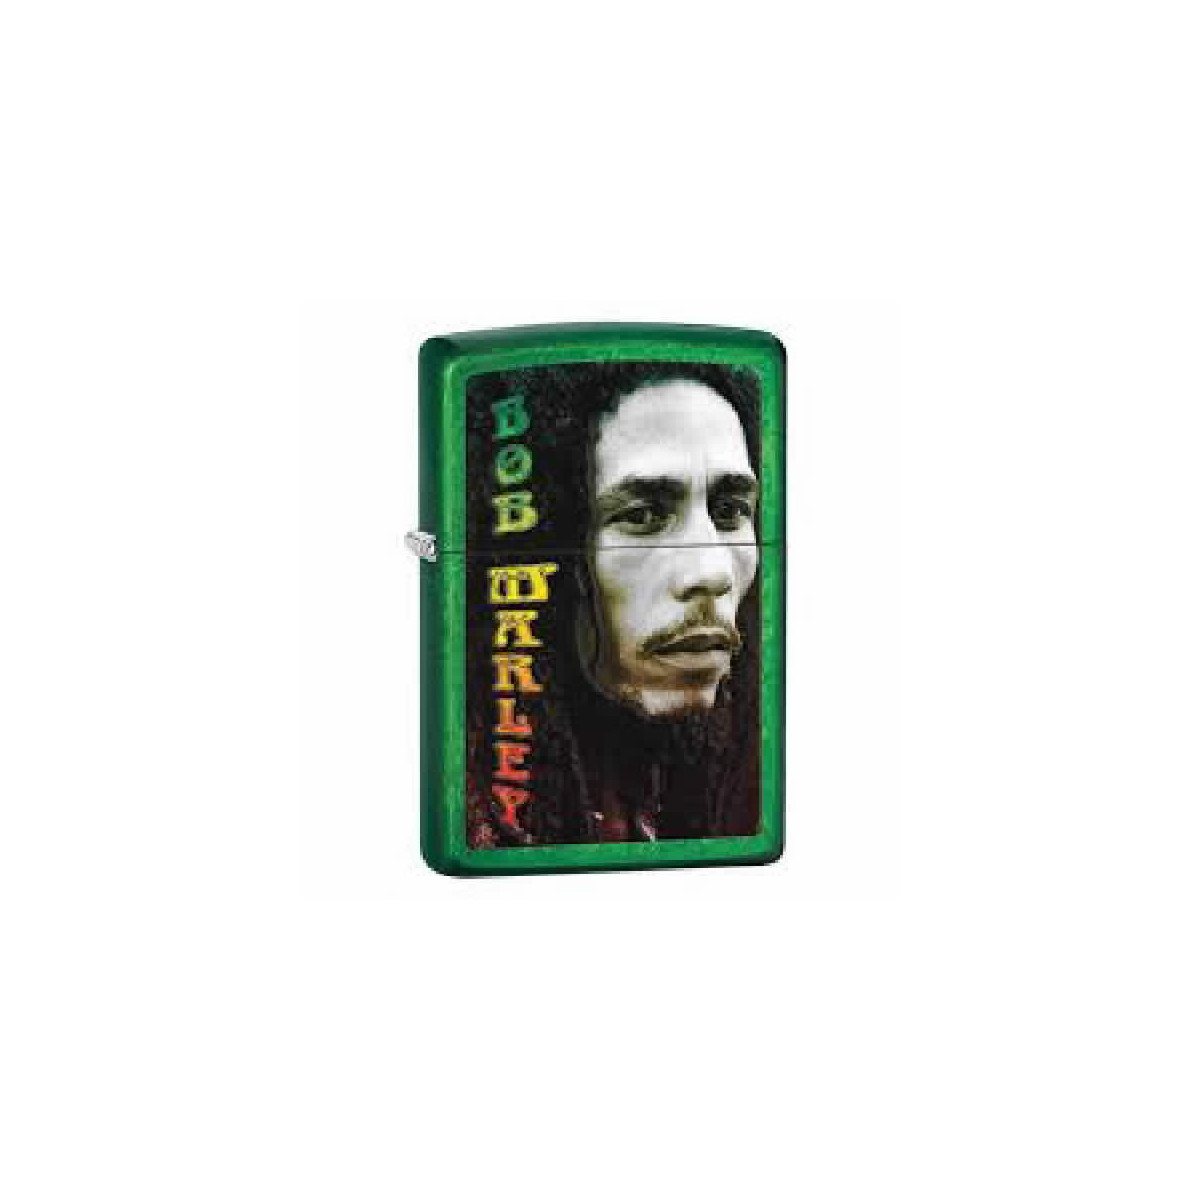 Encendedor Zippo Bob Marley - 28256